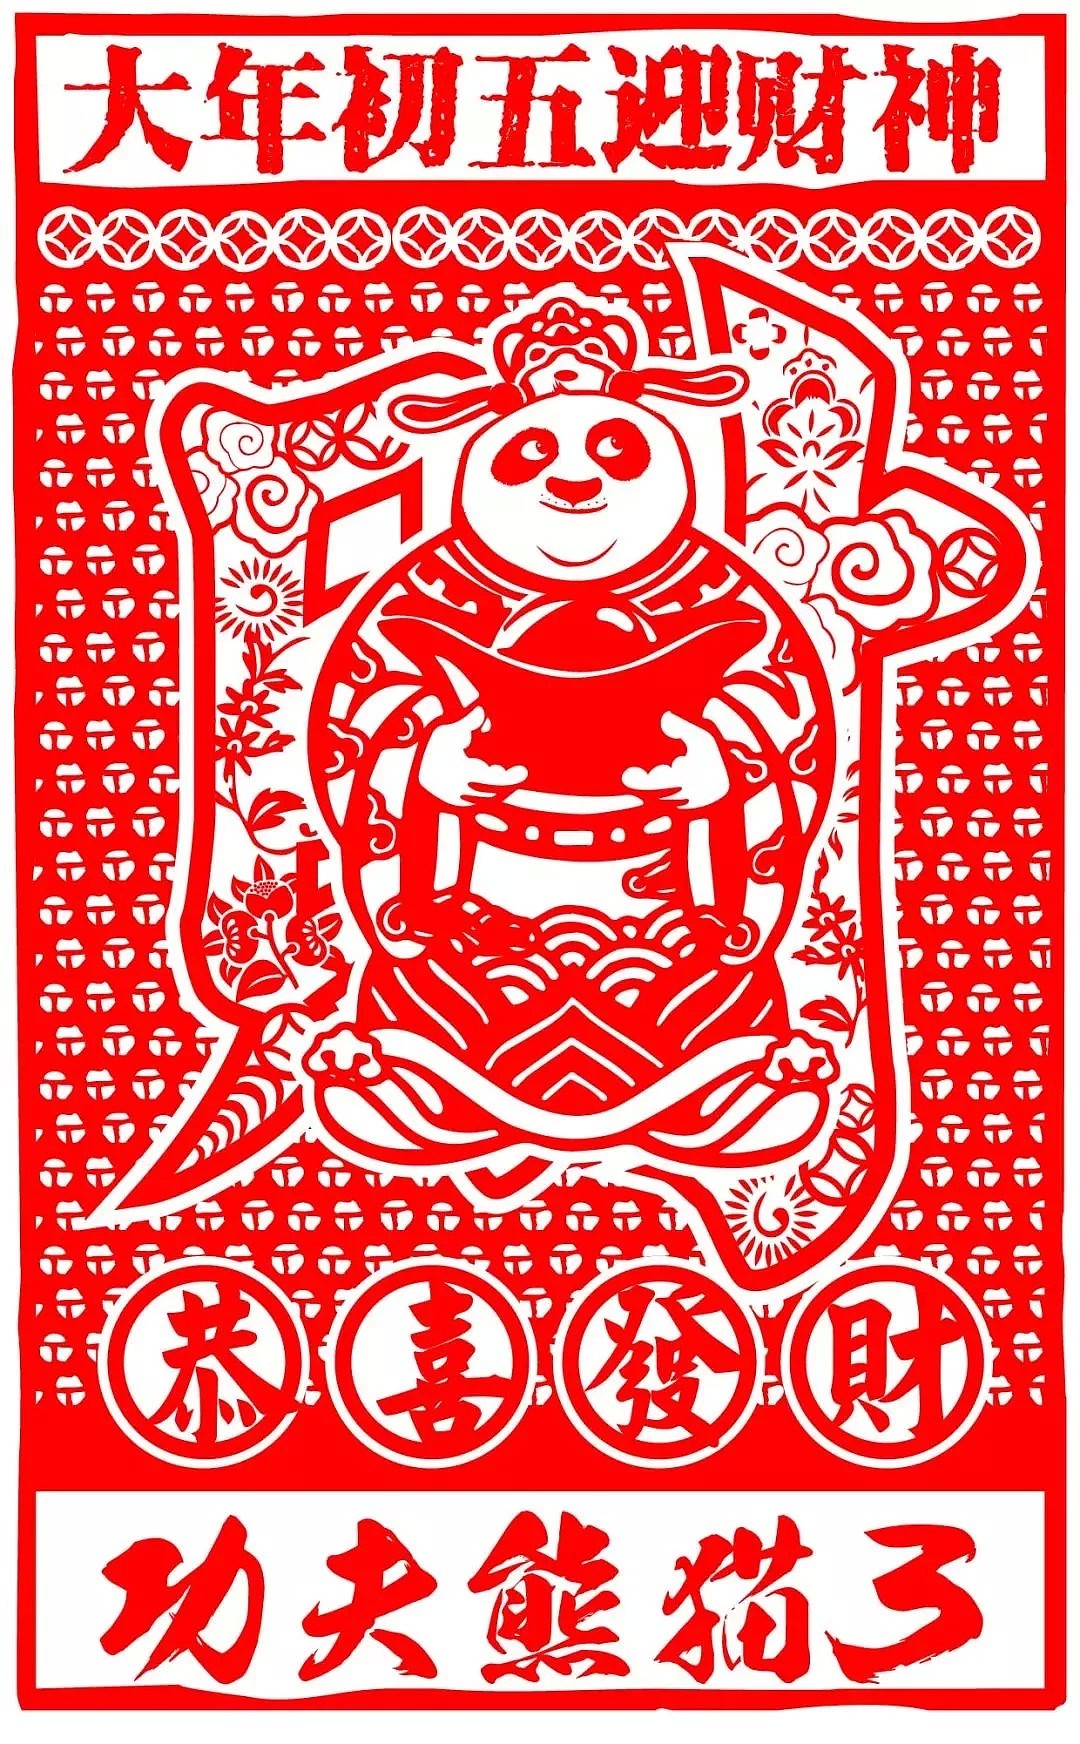 BBC中国风海报美哭了！这些好莱坞大片海报，还有更高级的中国风脑洞，总有一张惊艳你！（组图） - 93